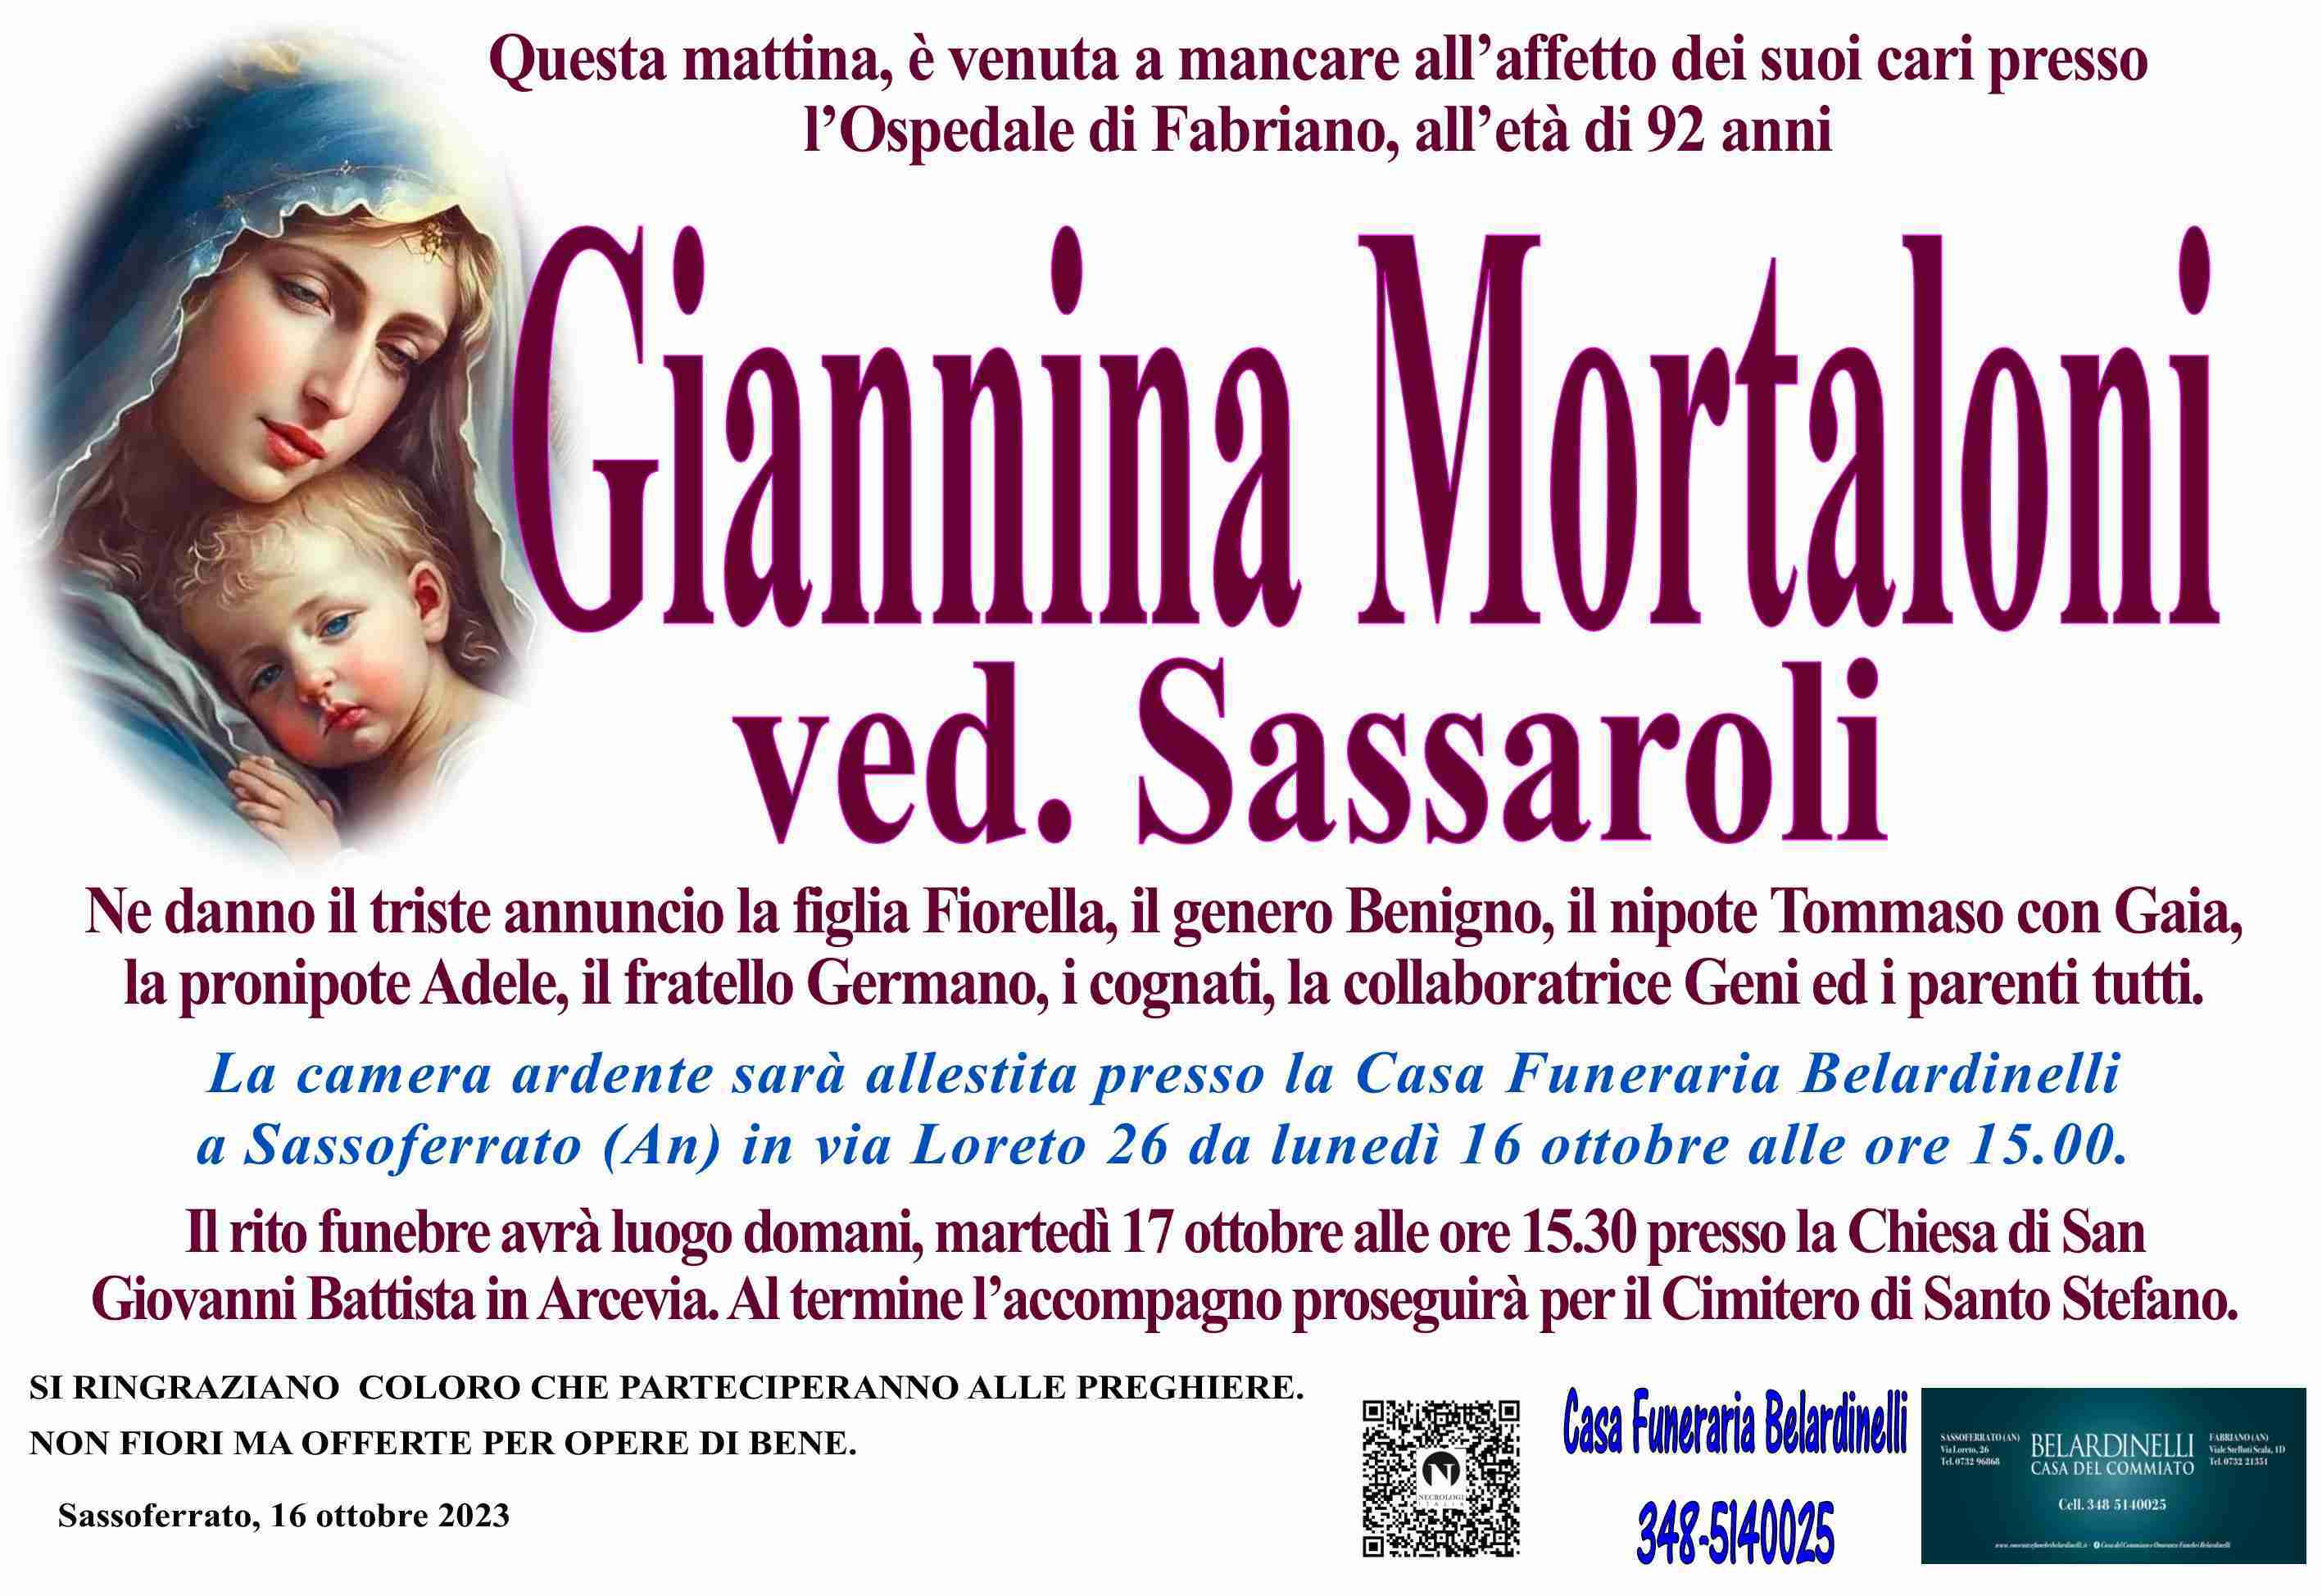 Giannina Mortaloni